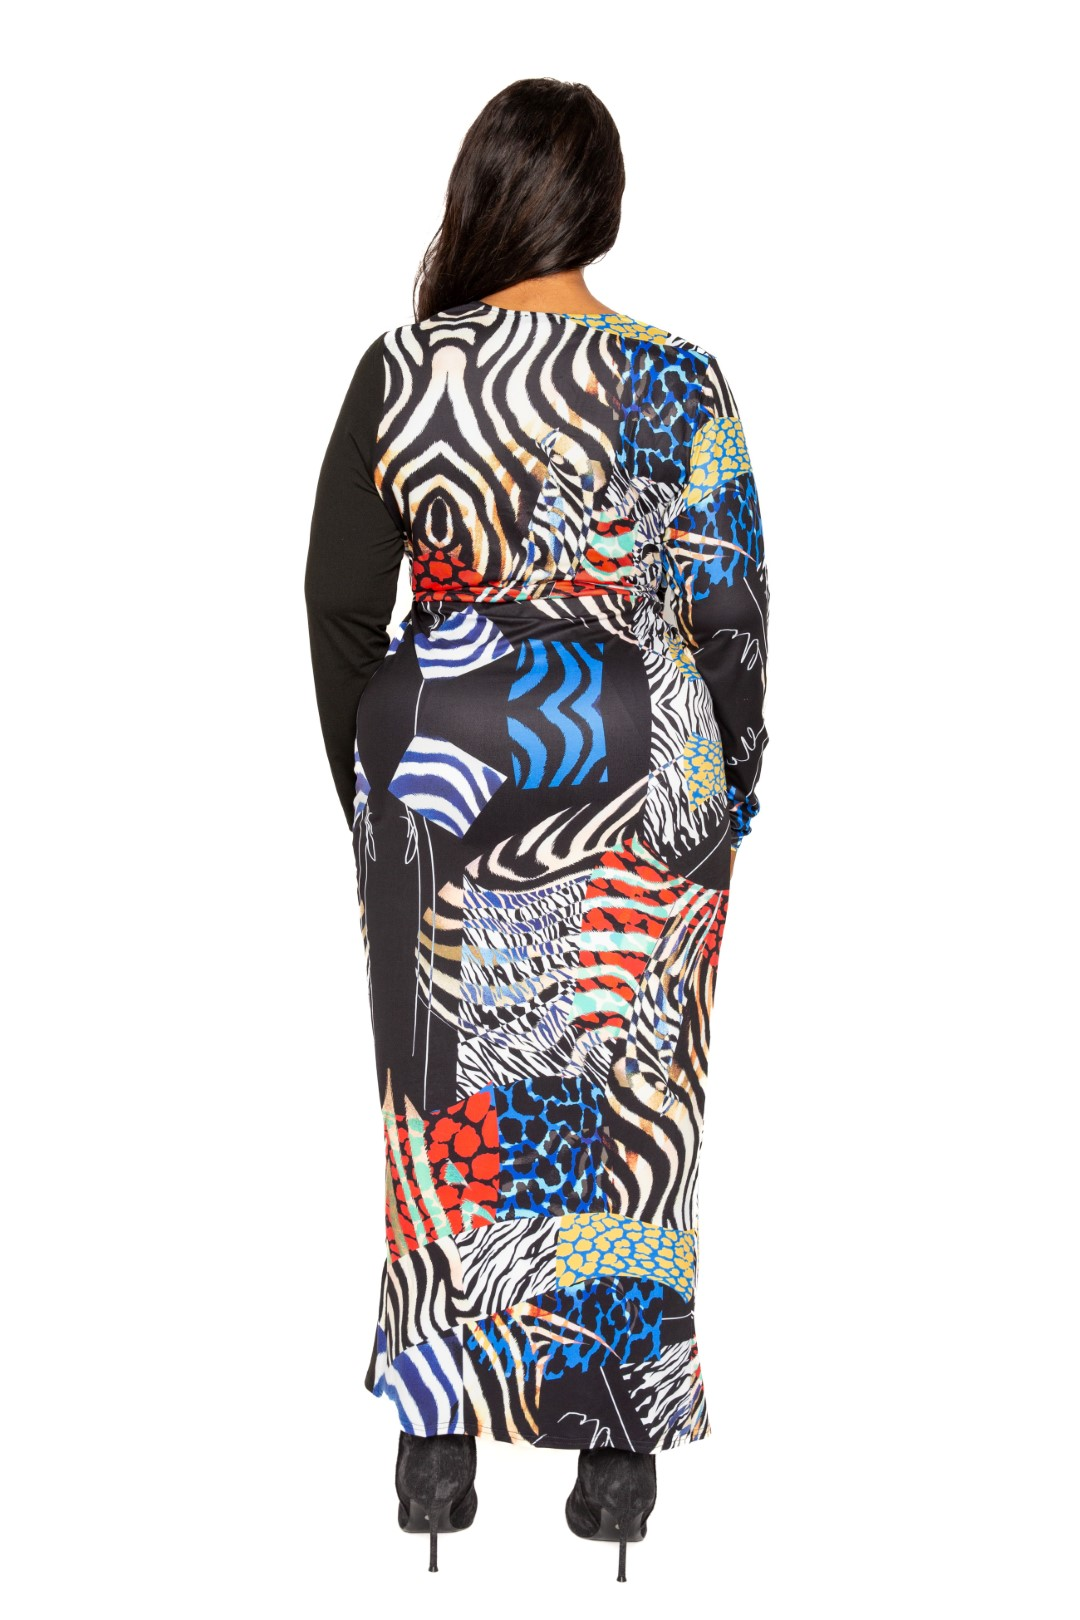 Voluptuous (+) Plus Size Animal Print Splice Women's Dress With High-low Hem - women's dress at TFC&H Co.